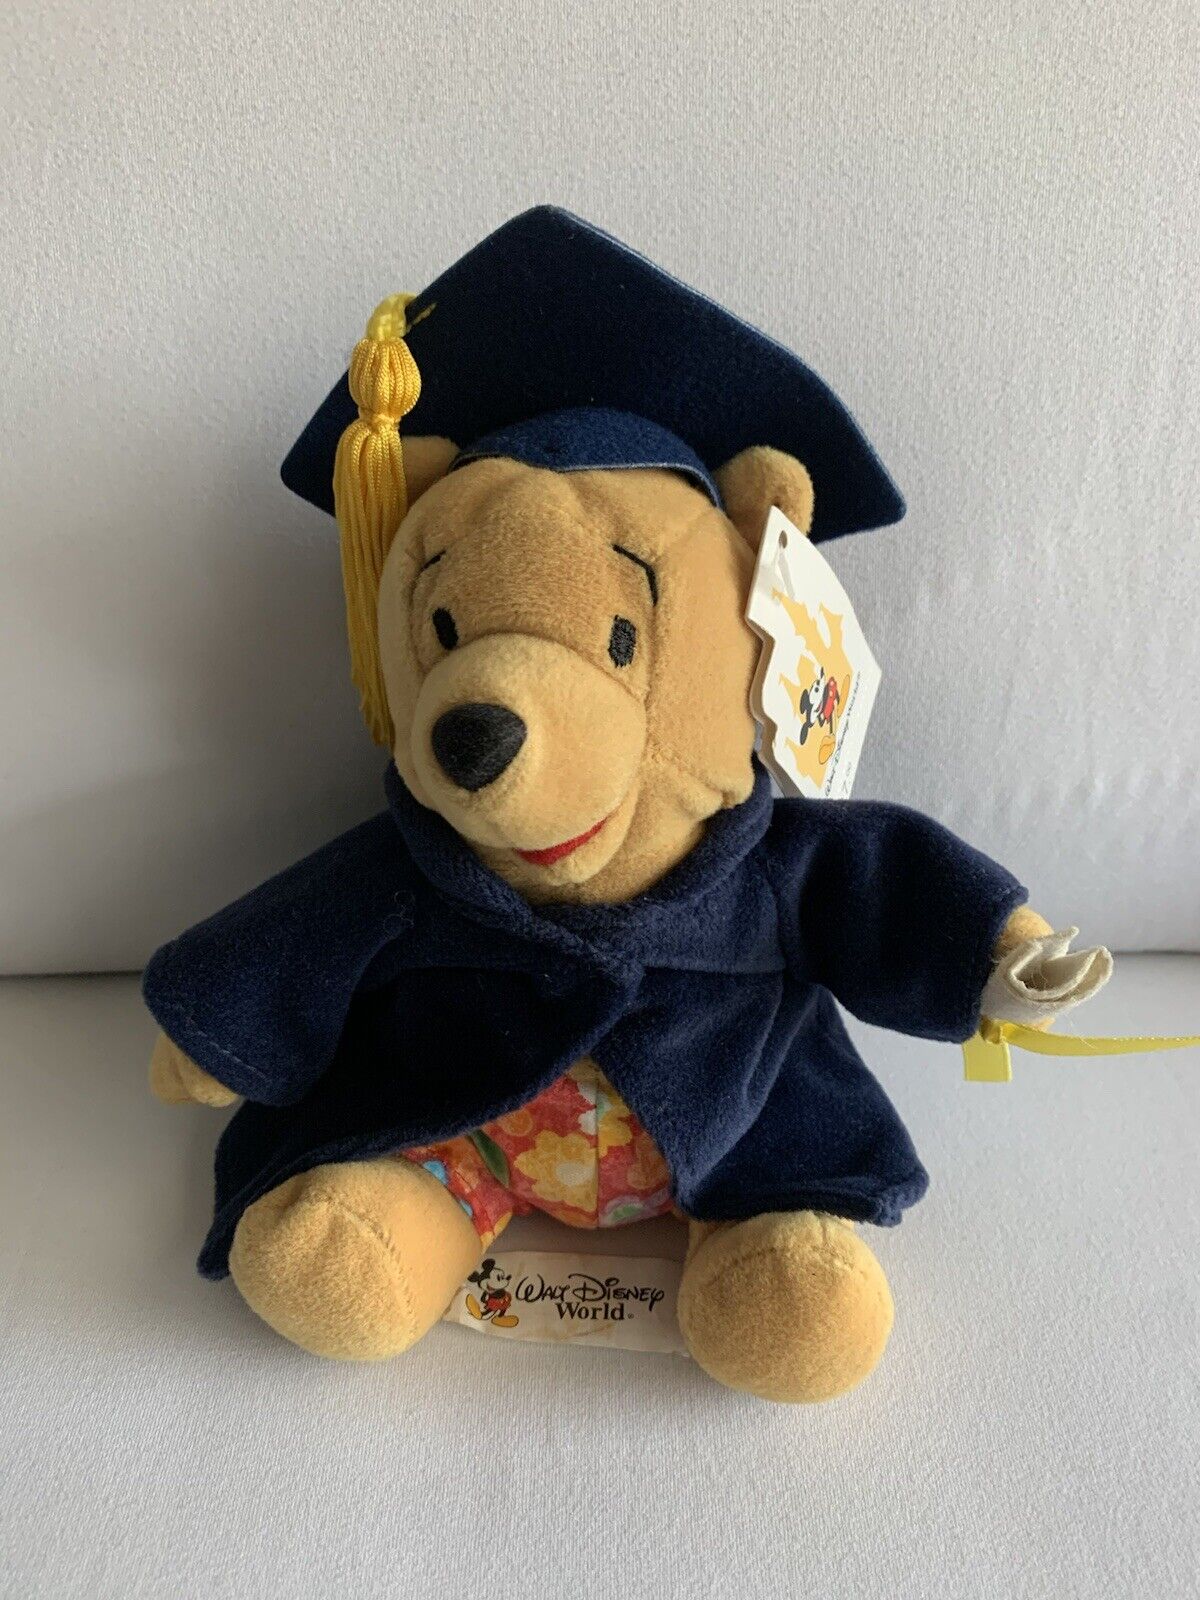 Walt Disney World Grad Nite Winnie Plus Nashville-Davidson Mall Stuffed Pooh Beanbag Credence The